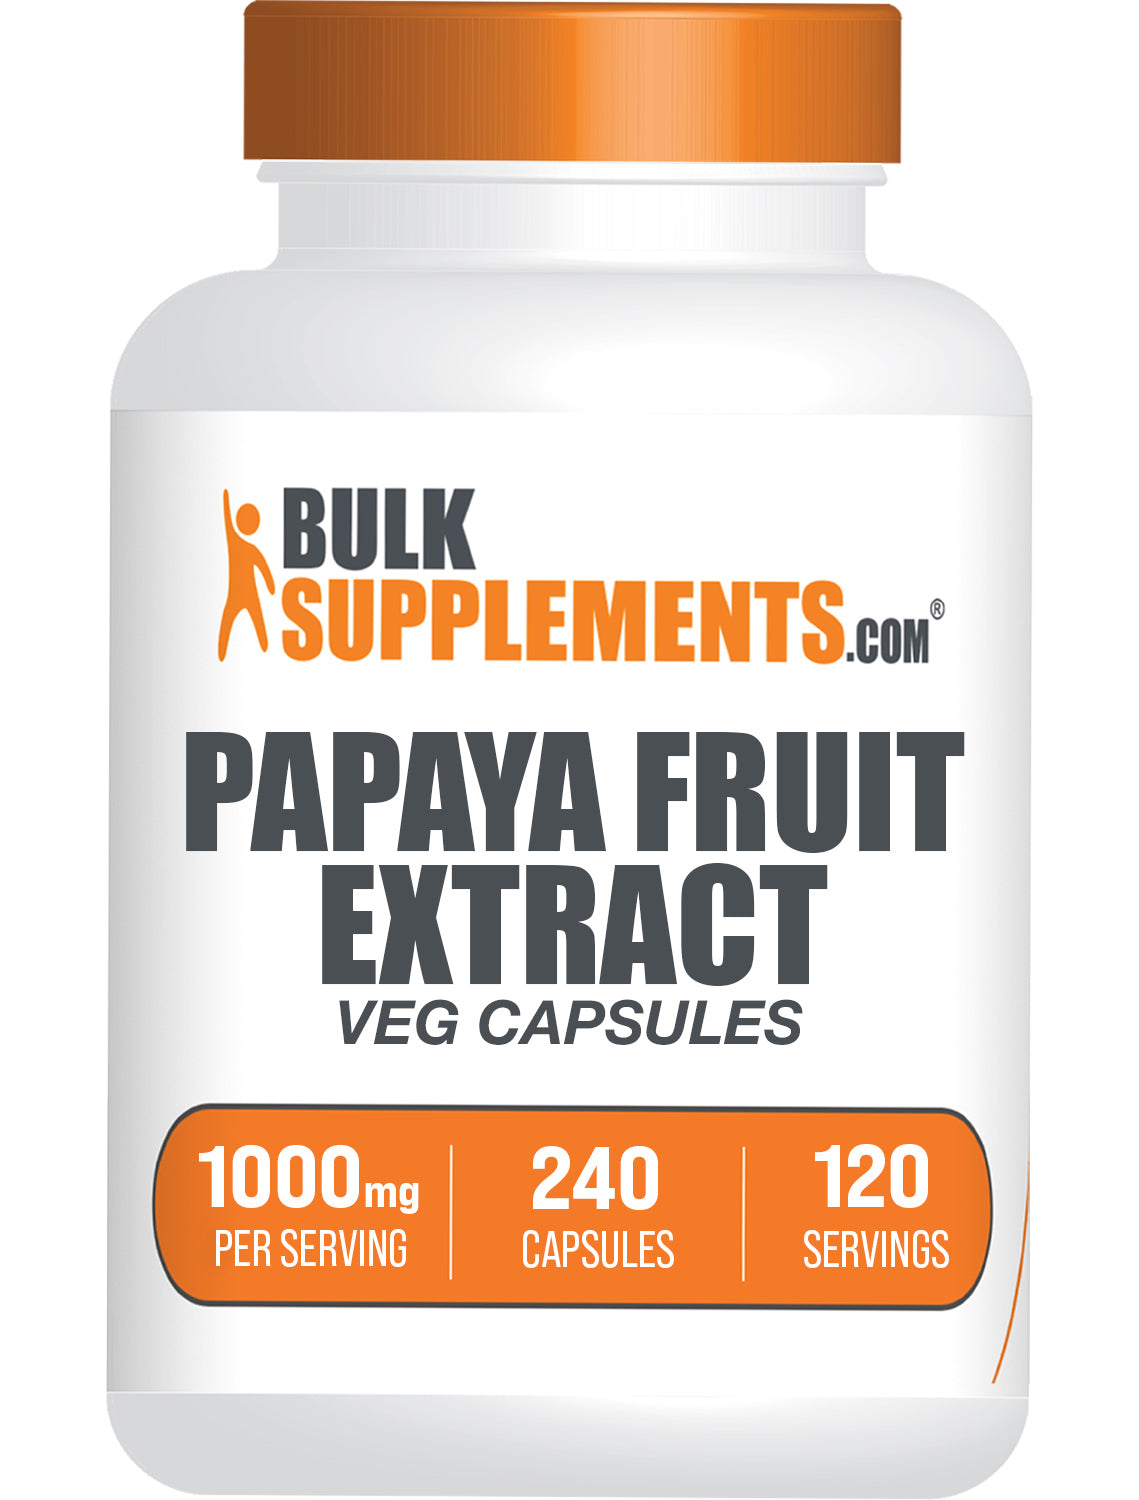 BulkSupplements.com Papaya Fruit Extract 240 ct Veg Capsules bottle